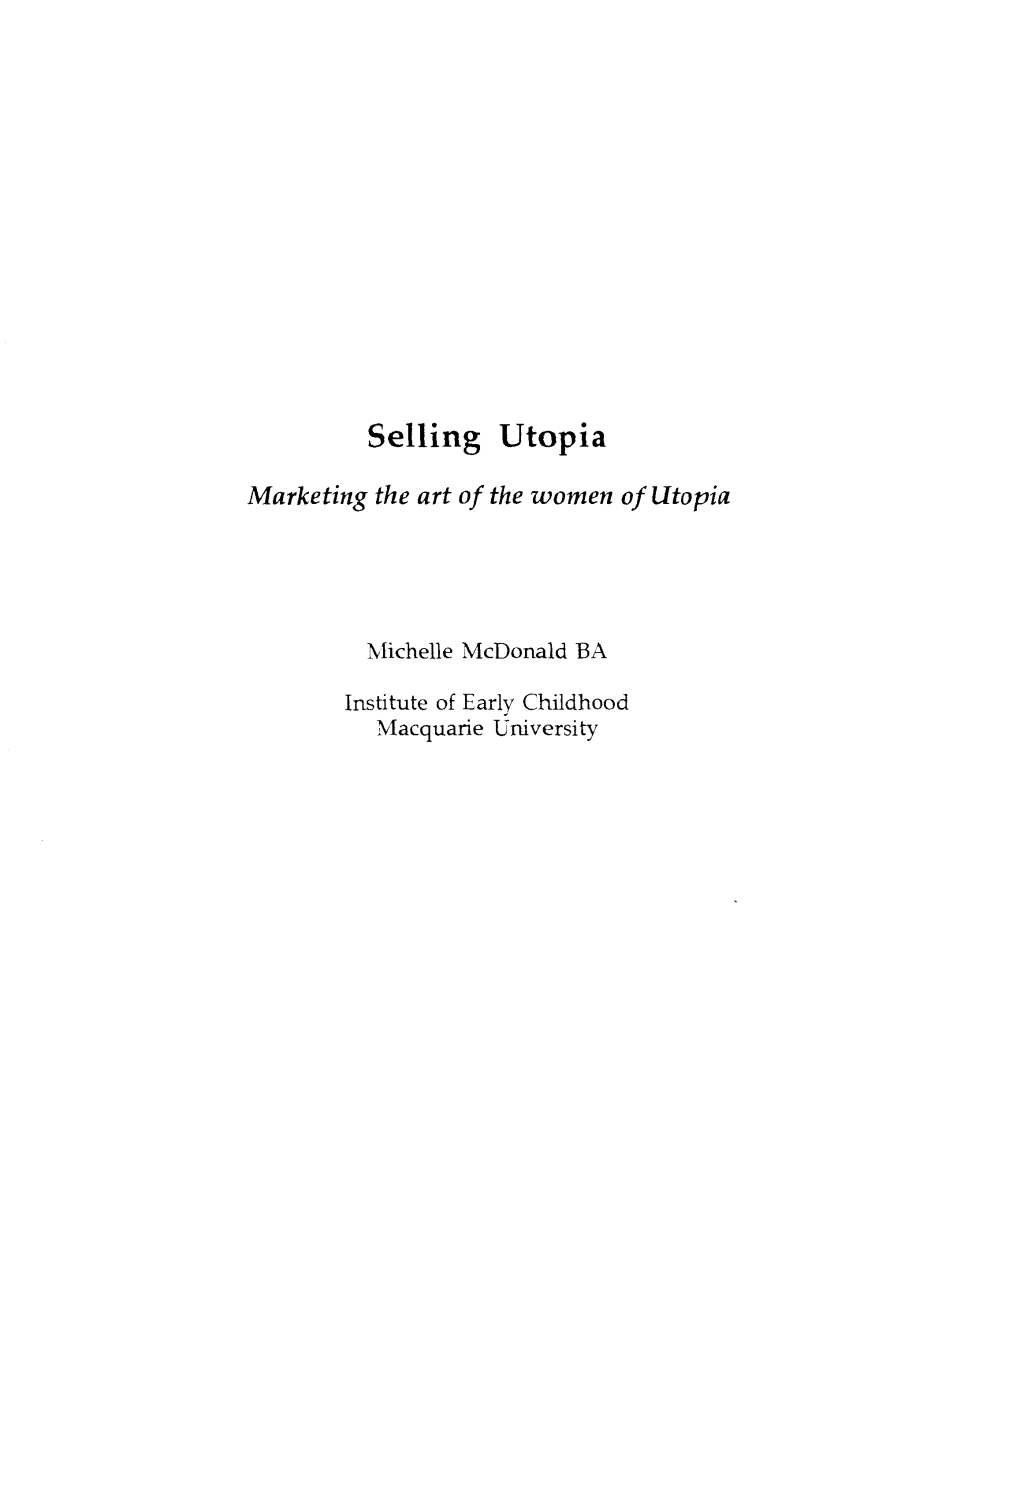 Selling Utopia Marketing the Art of the Women of Utopia